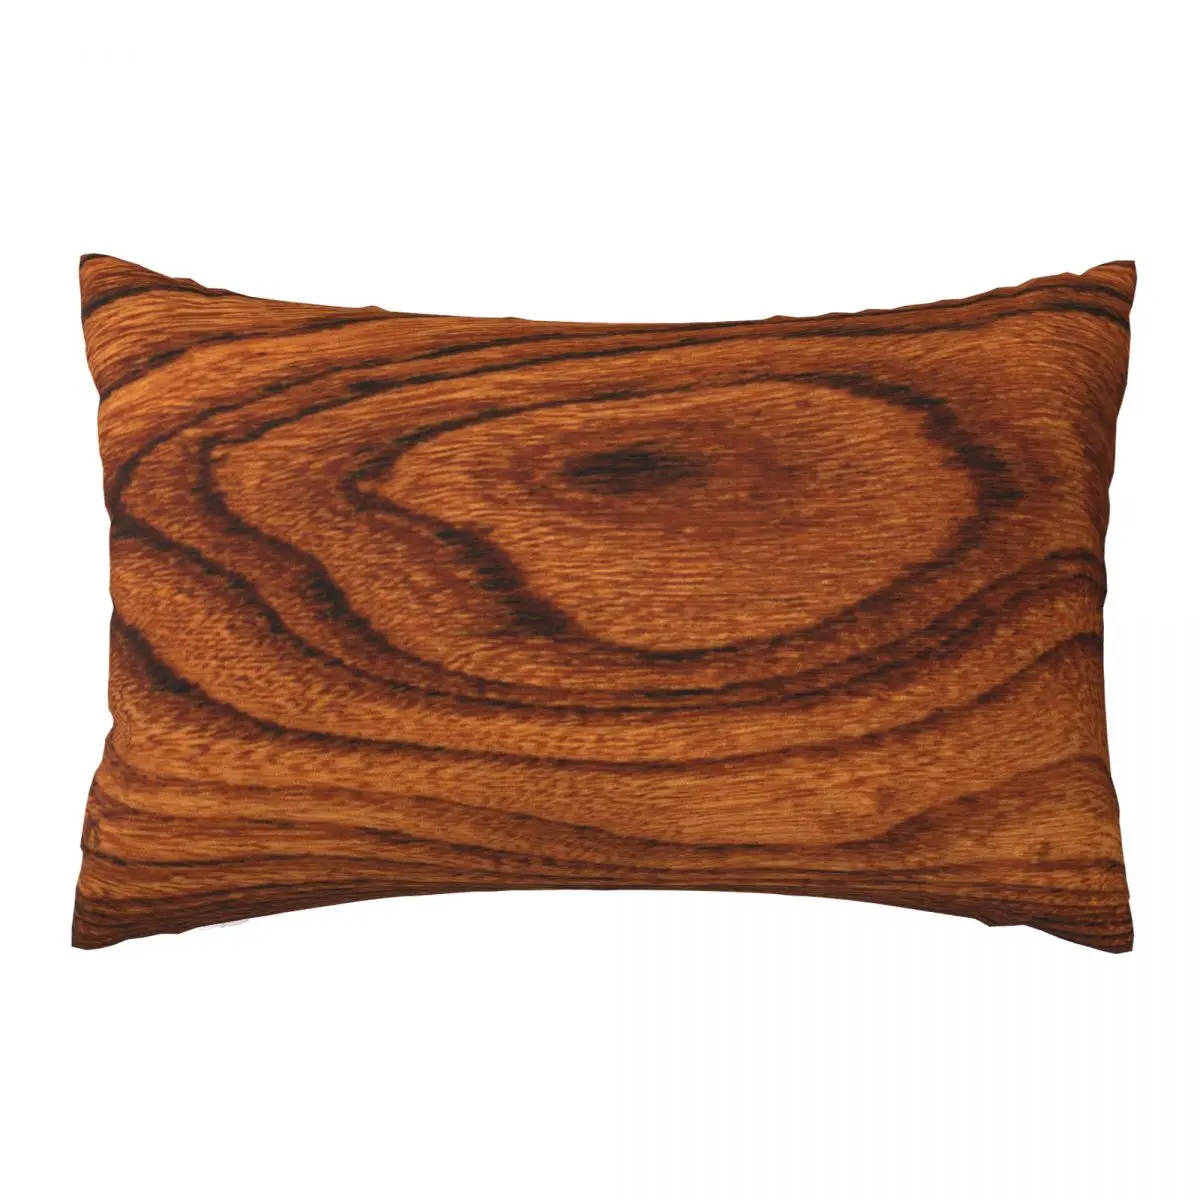 

Wood Grain Decorative Pillow Covers Throw Pillow Cover Home Pillows Shells Cushion Cover Zippered Pillowcase